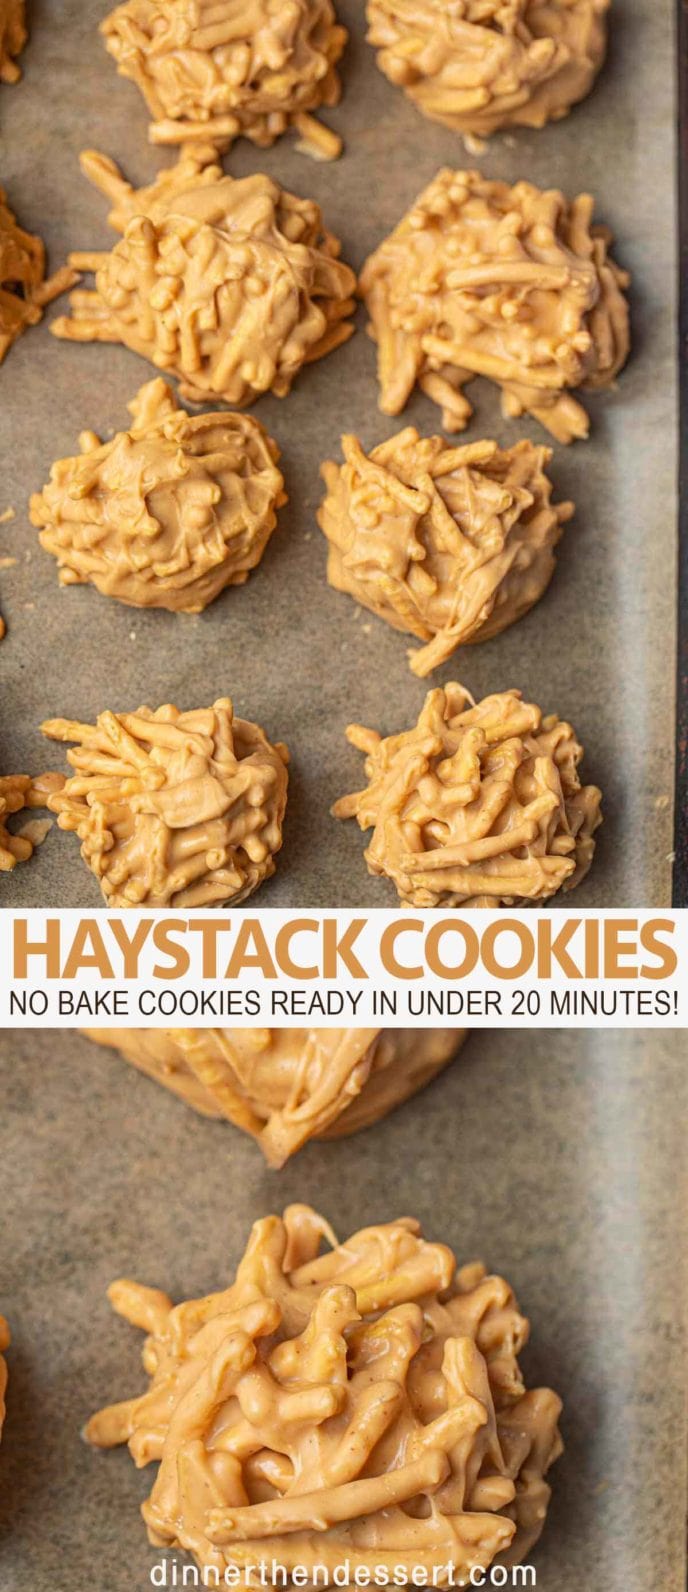 Haystack cookies on a baking sheet